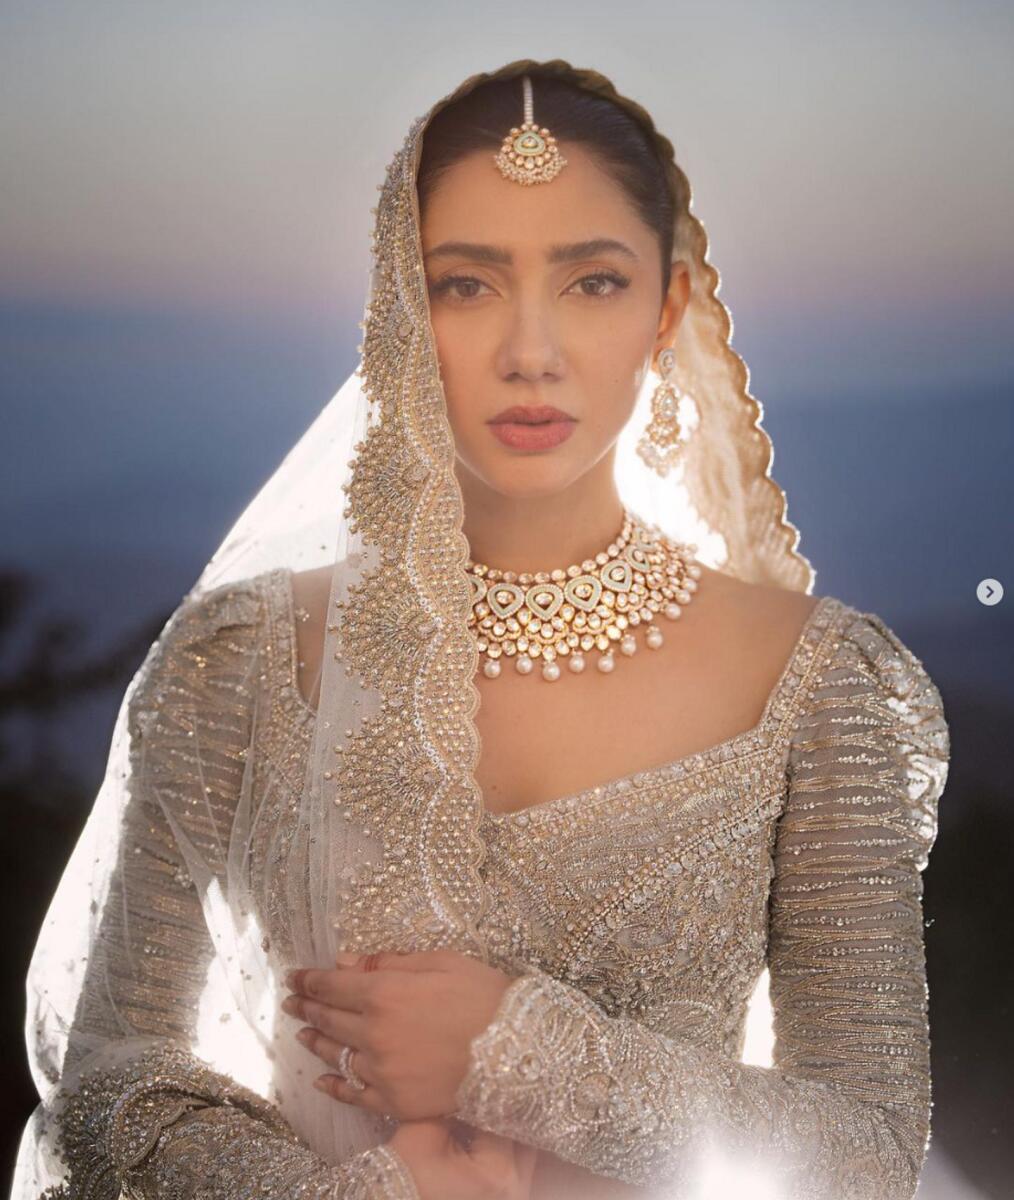 Look: Pakistani actress Mahira Khan wears a Faraz Manan design for her wedding day - News | Khaleej Times